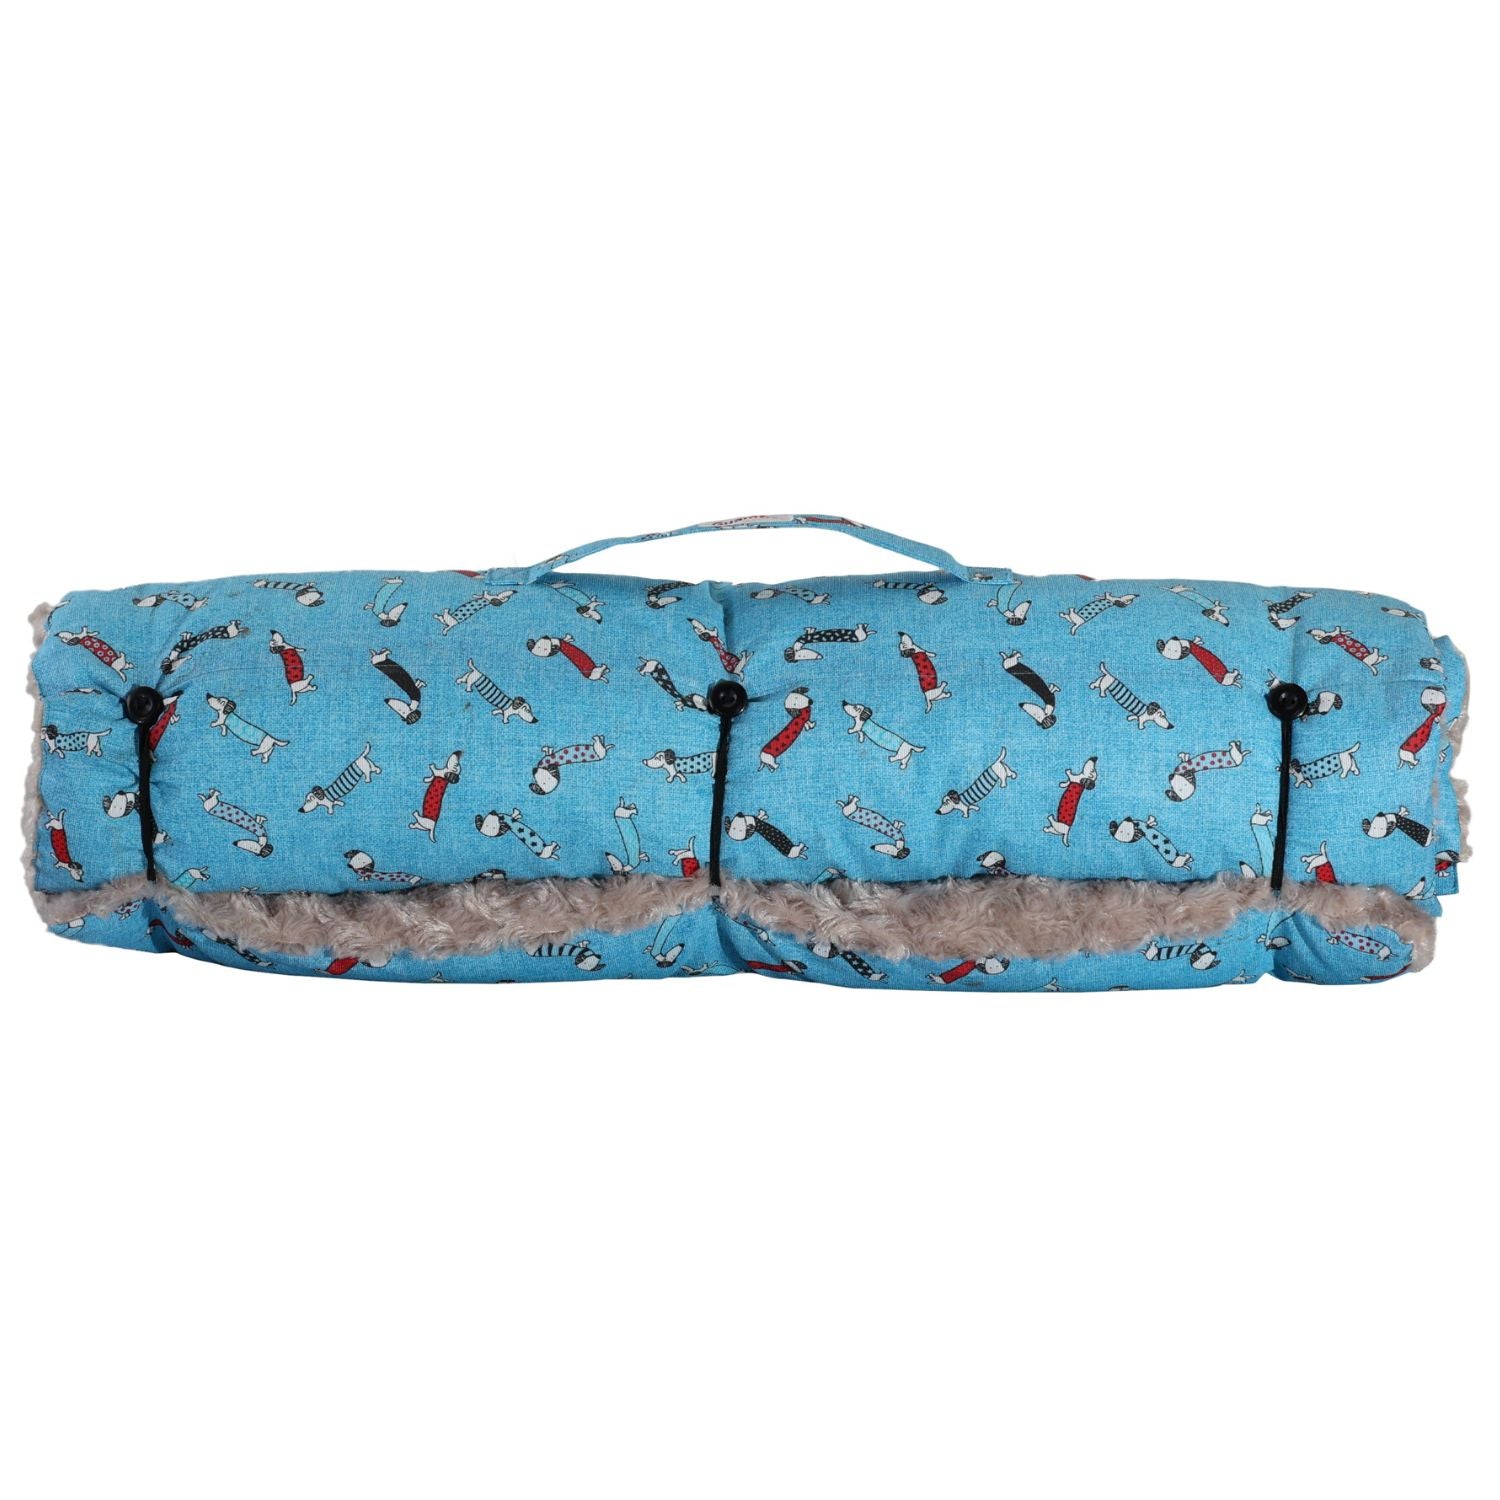 Cama para perro portable Guamba Travel Roll Teckel Azul